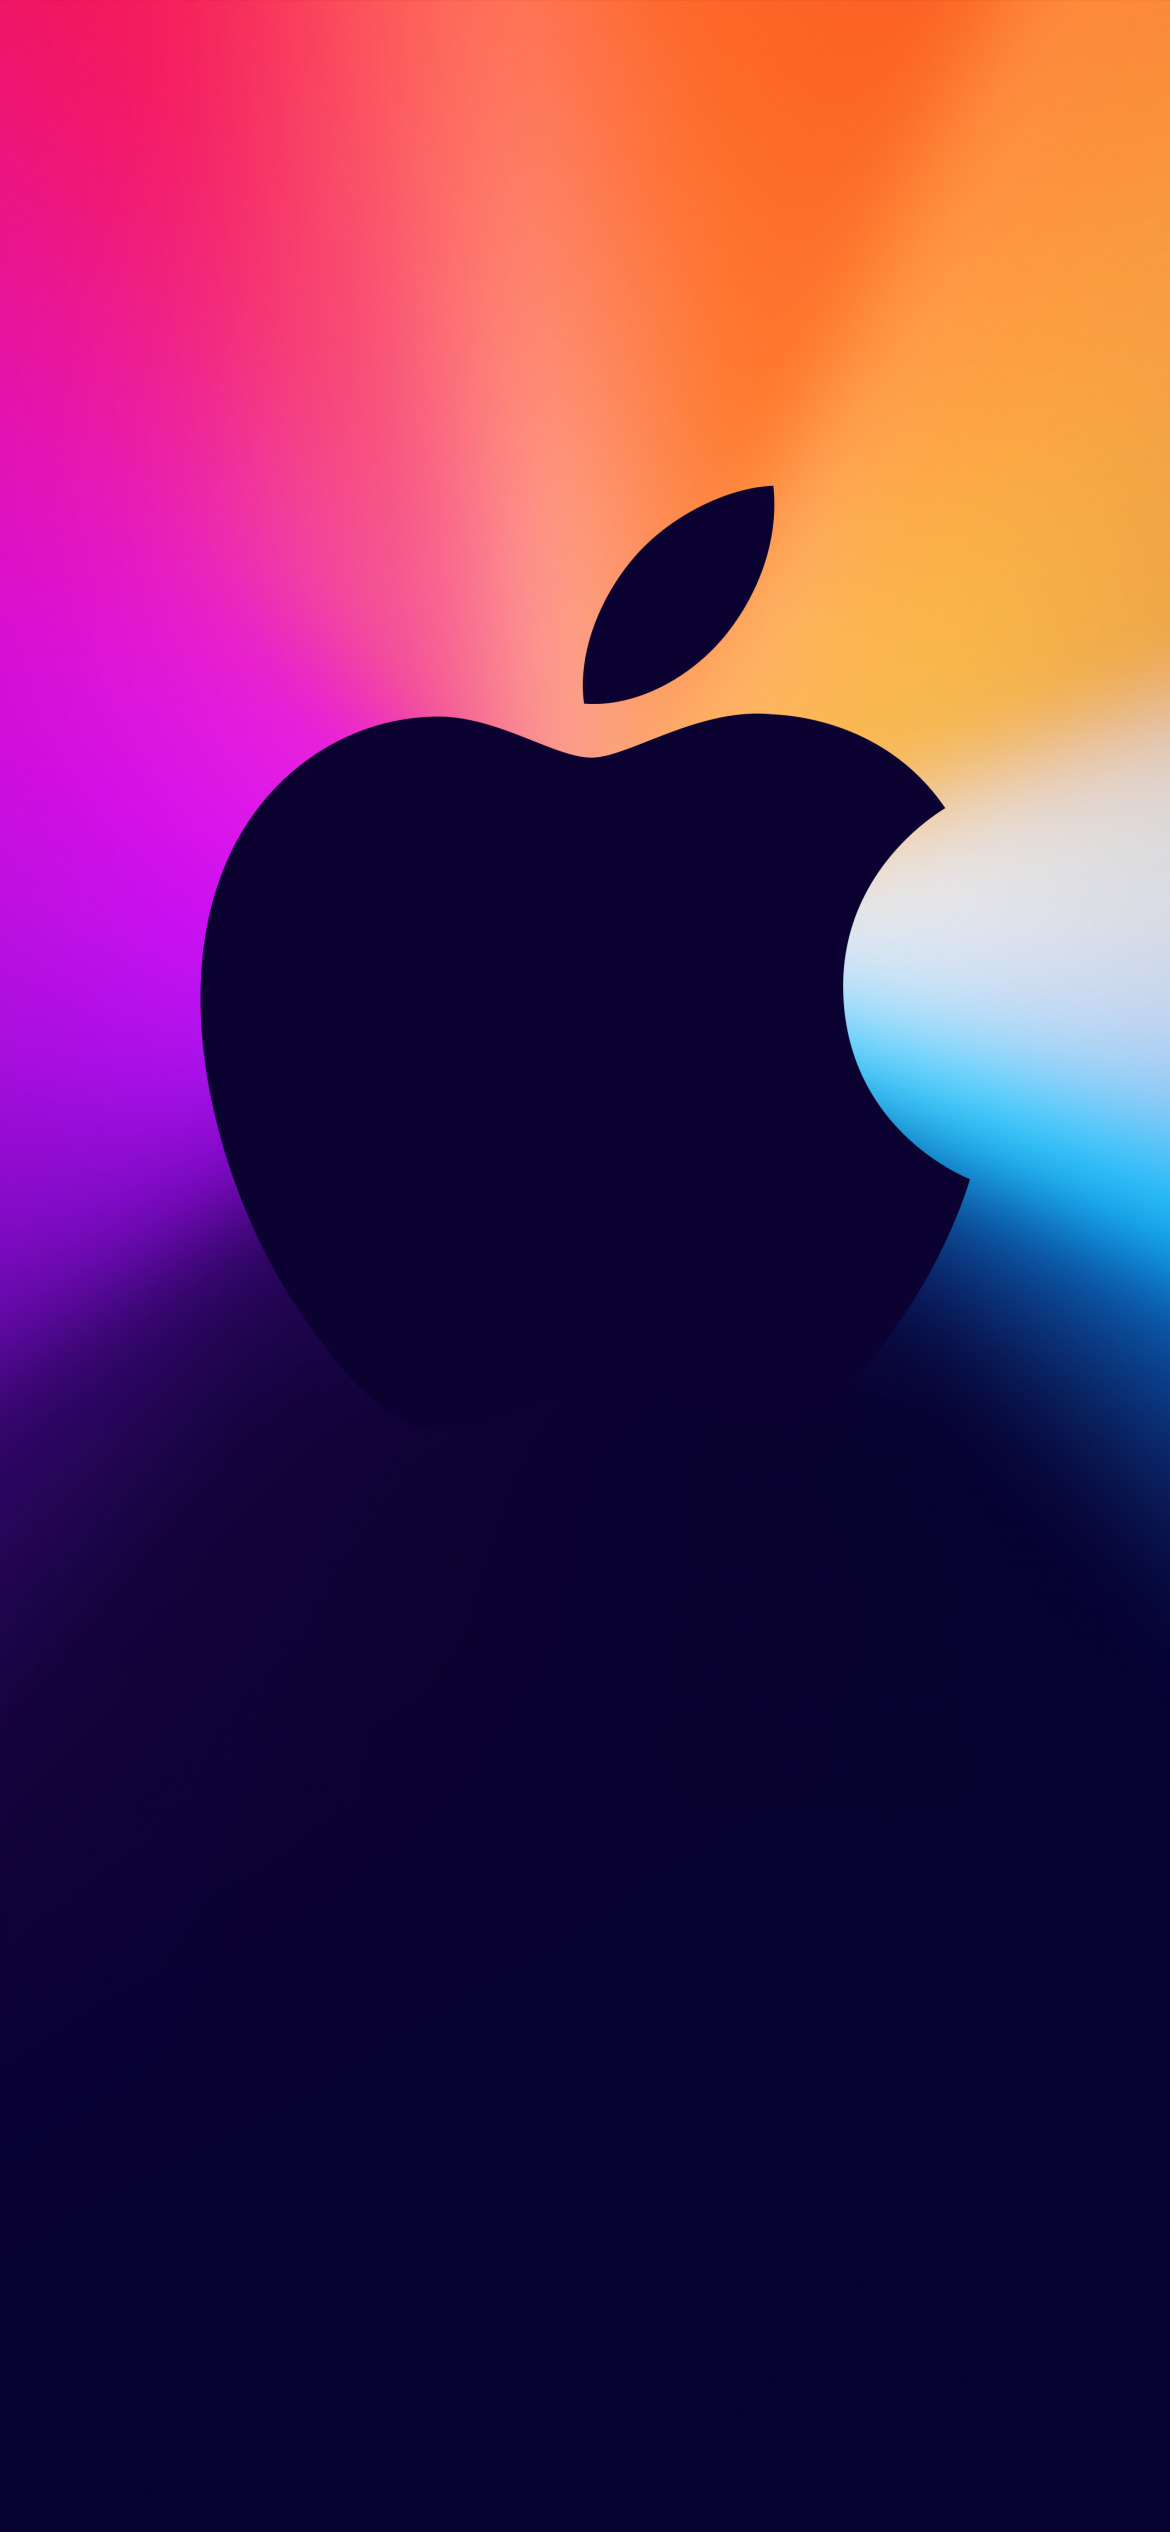 Download Apple Wallpaper Desktop Iphone Logo Macbook HQ PNG Image   FreePNGImg